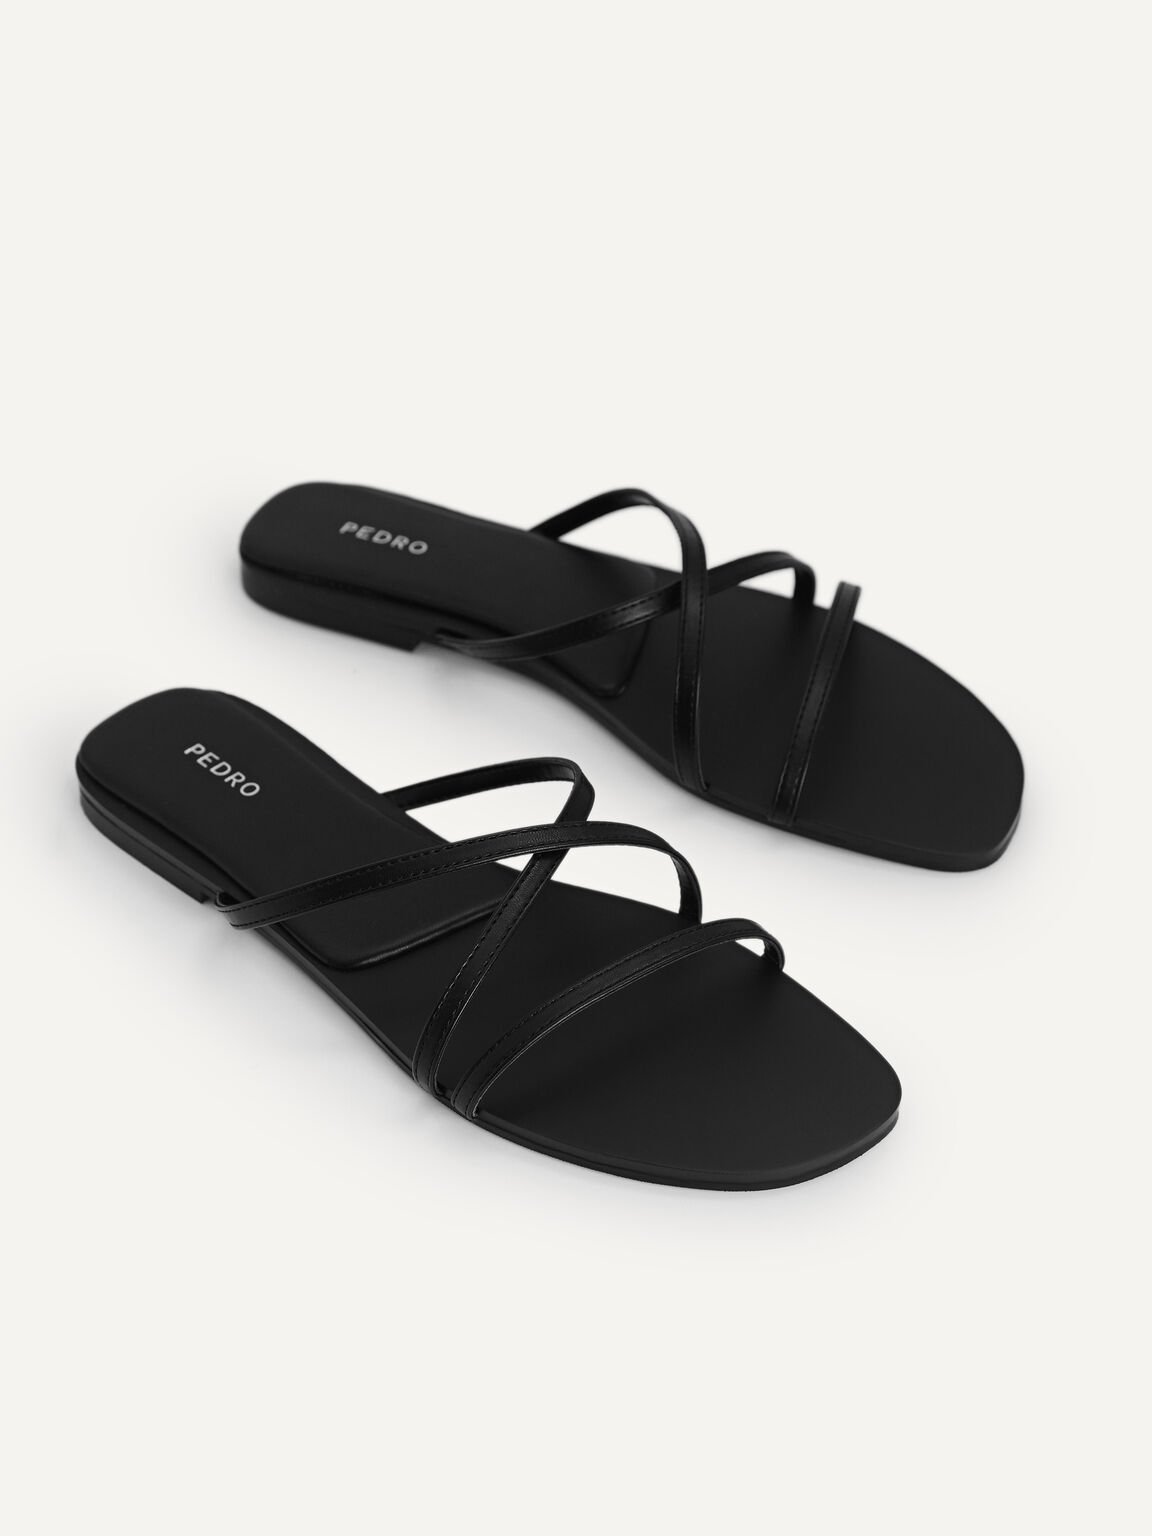 Criss-Cross Strappy Sandals, Black